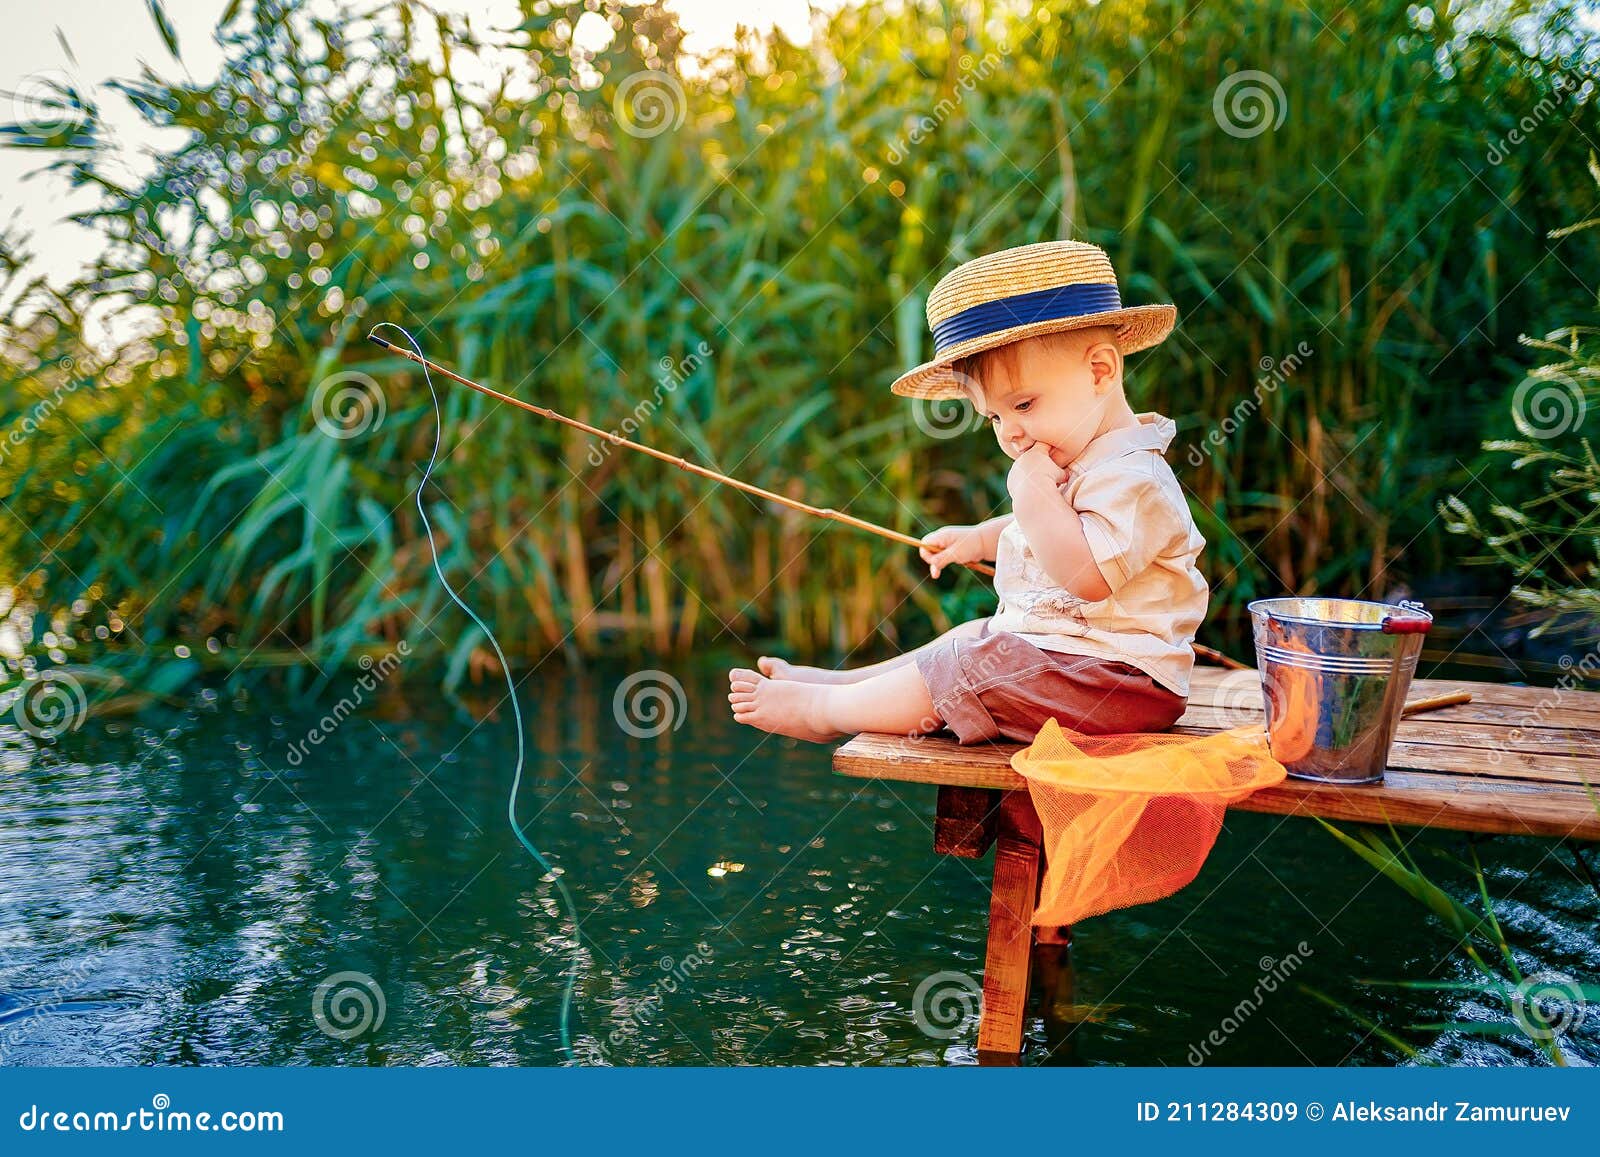 https://thumbs.dreamstime.com/z/little-boy-straw-hat-sitting-edge-wooden-dock-fishing-lake-sunset-211284309.jpg